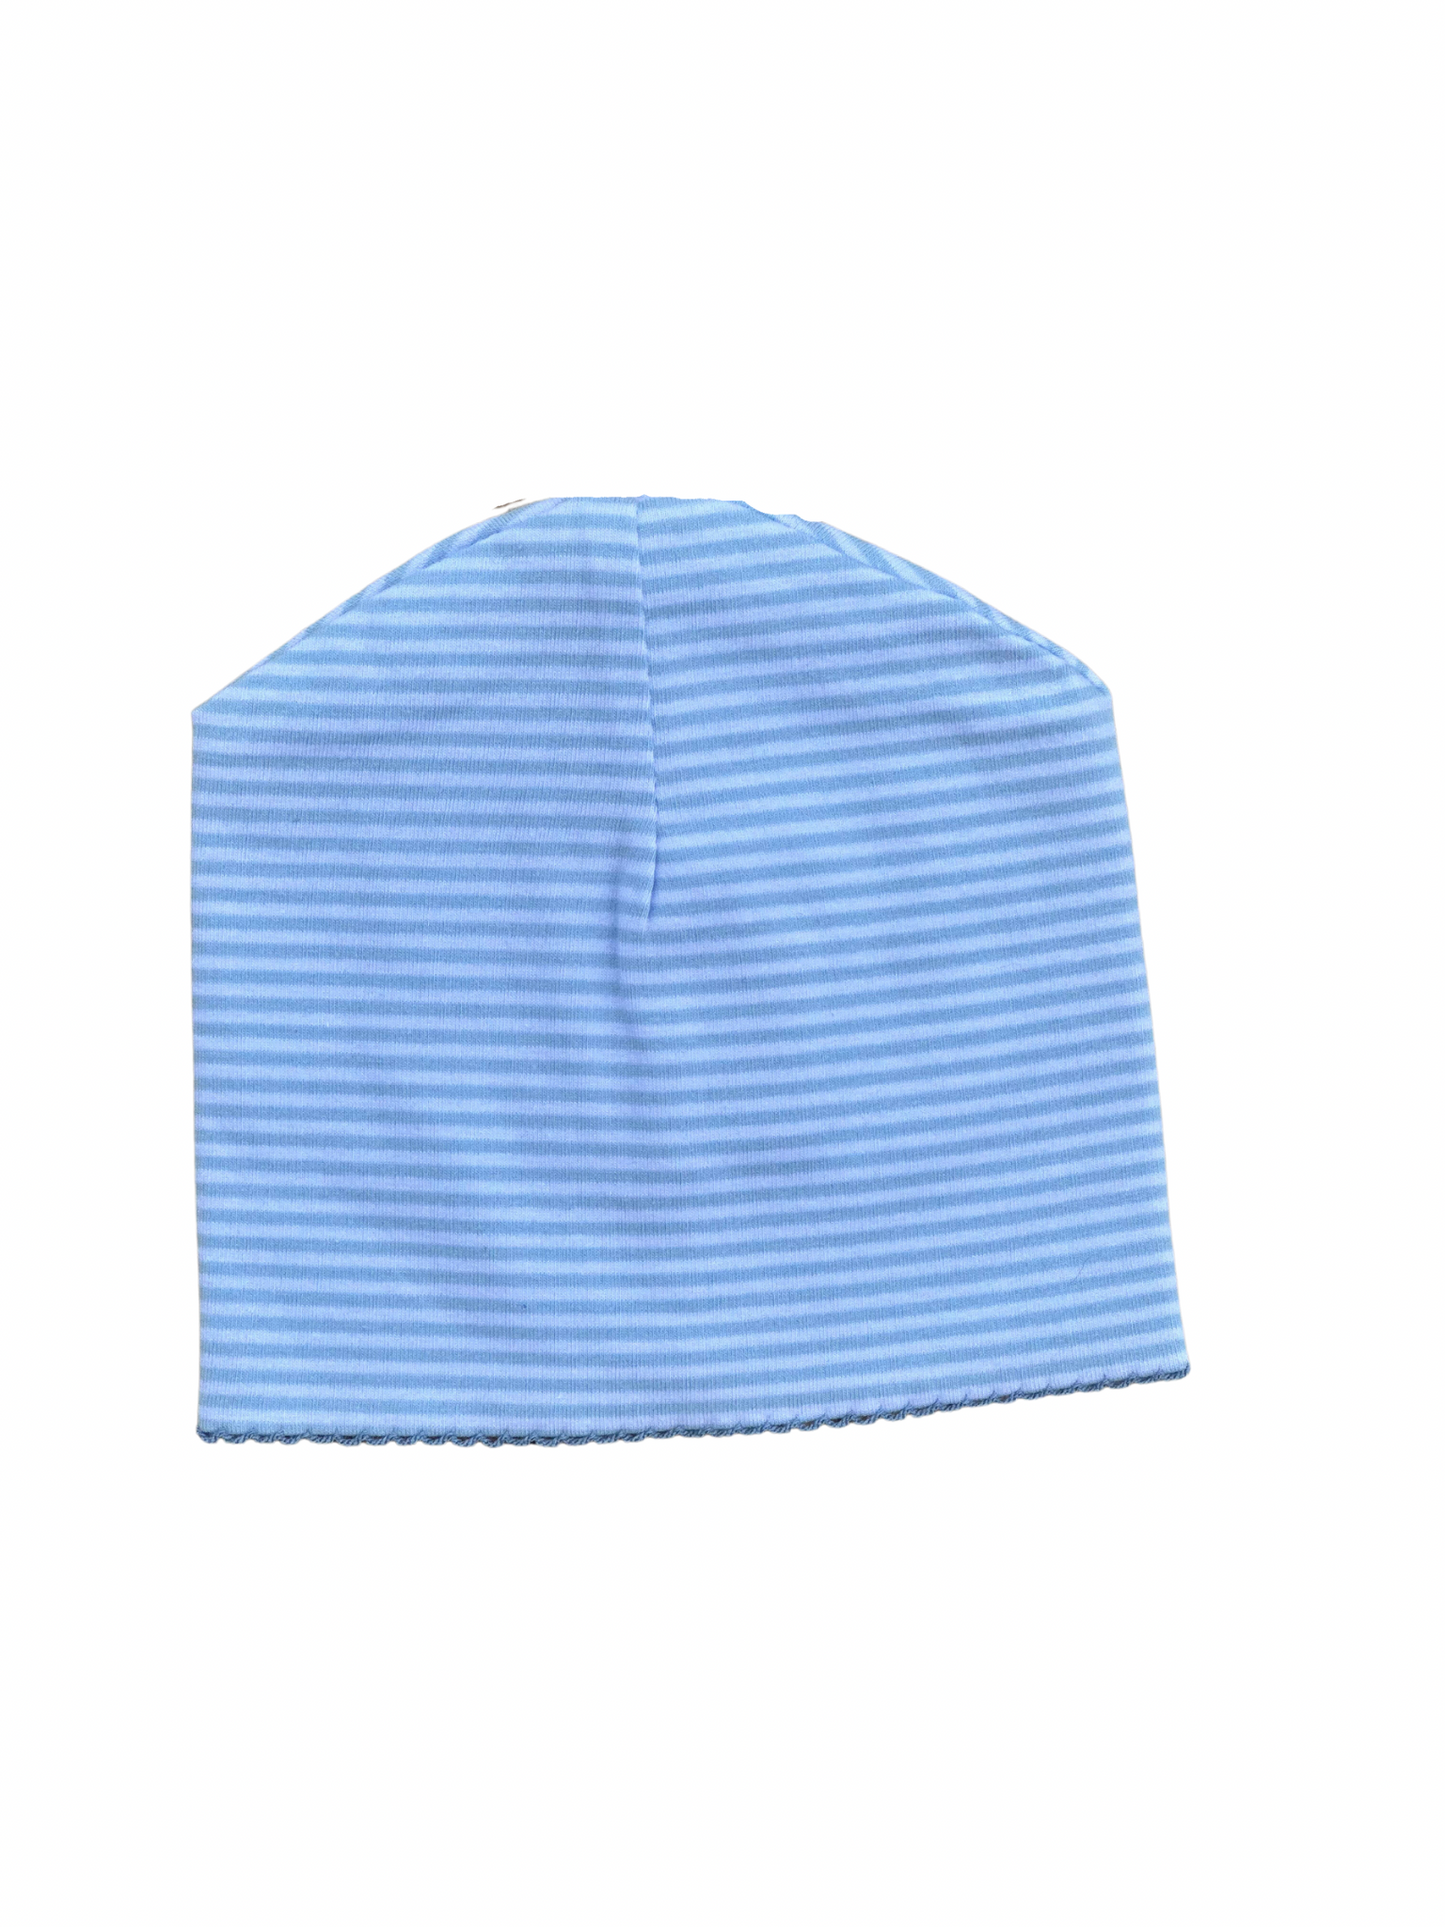 Infant Hats - Stripe